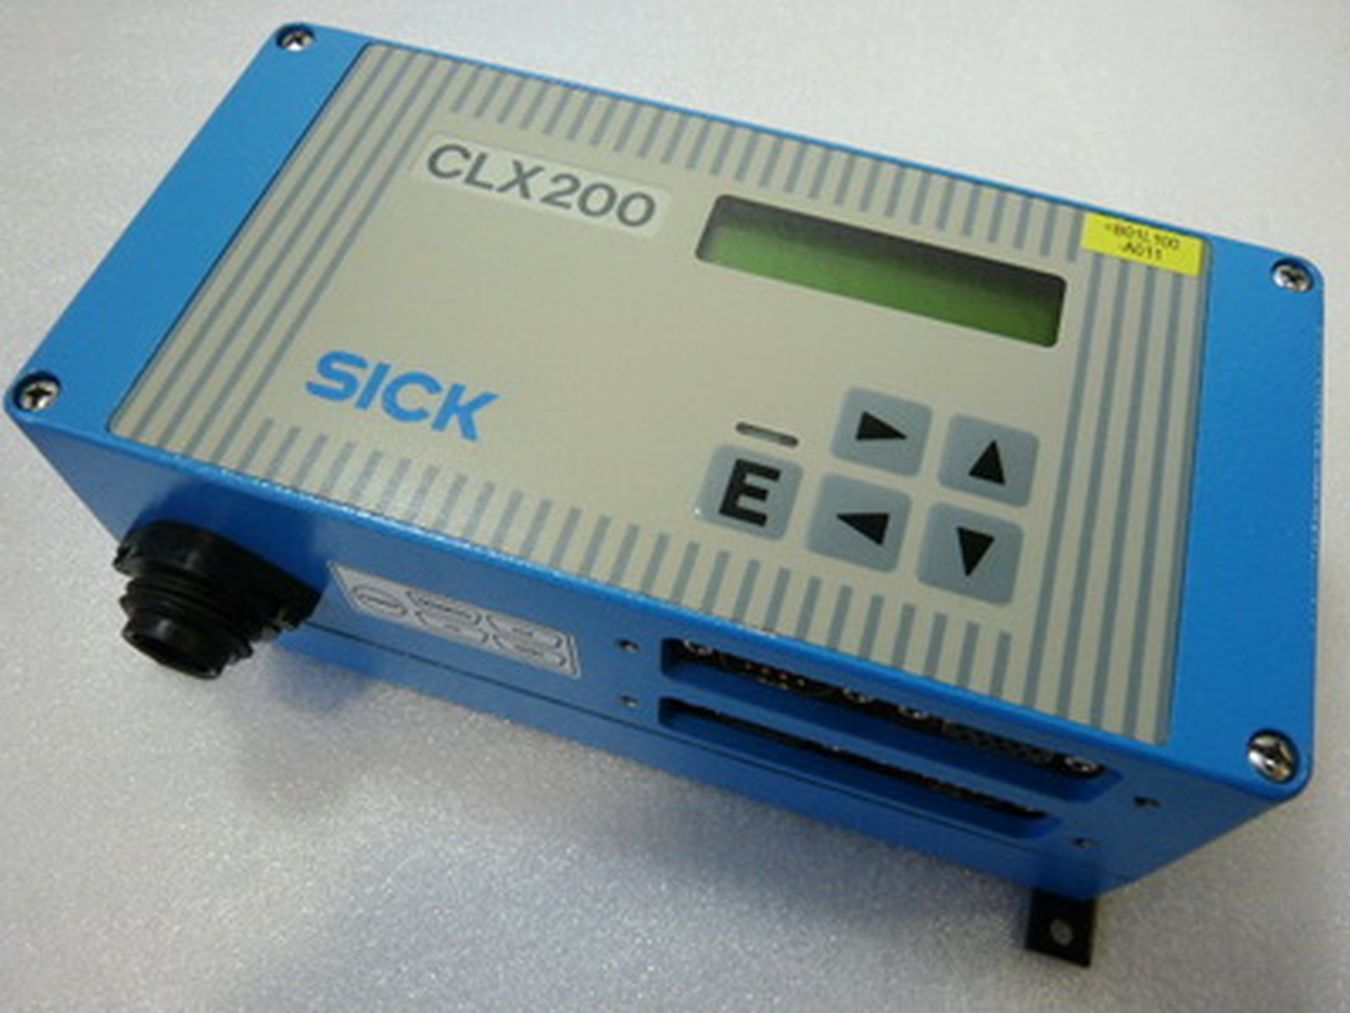 Sick CLX200-3031 Netzwerk-Controller 1012230 CLX200-3031,施克,PLC